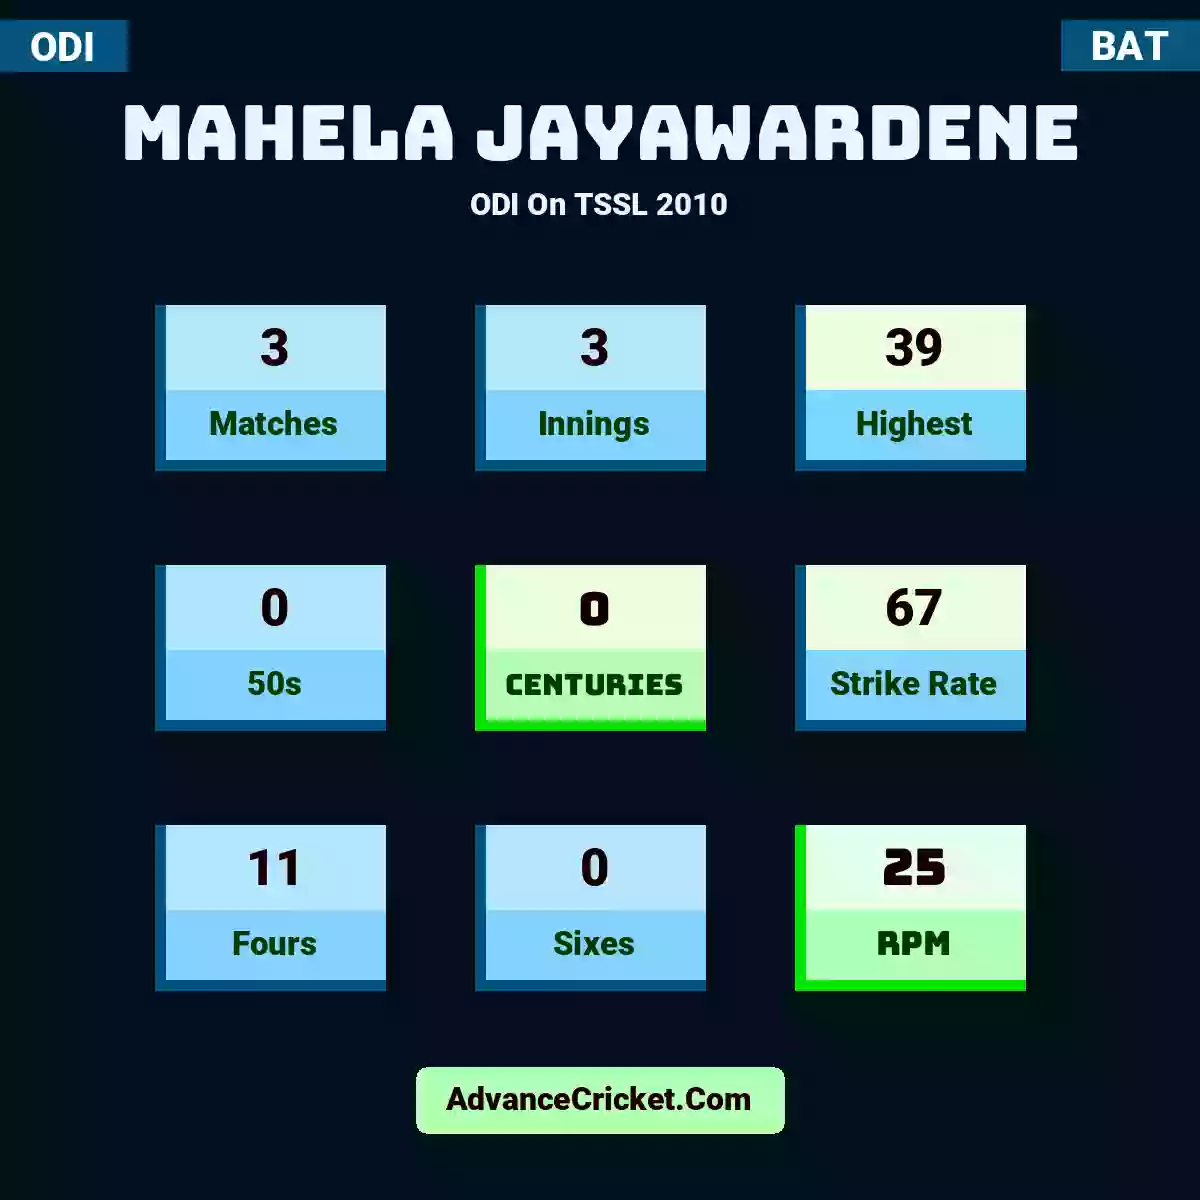 Mahela Jayawardene ODI  On TSSL 2010, Mahela Jayawardene played 3 matches, scored 39 runs as highest, 0 half-centuries, and 0 centuries, with a strike rate of 67. M.Jayawardene hit 11 fours and 0 sixes, with an RPM of 25.